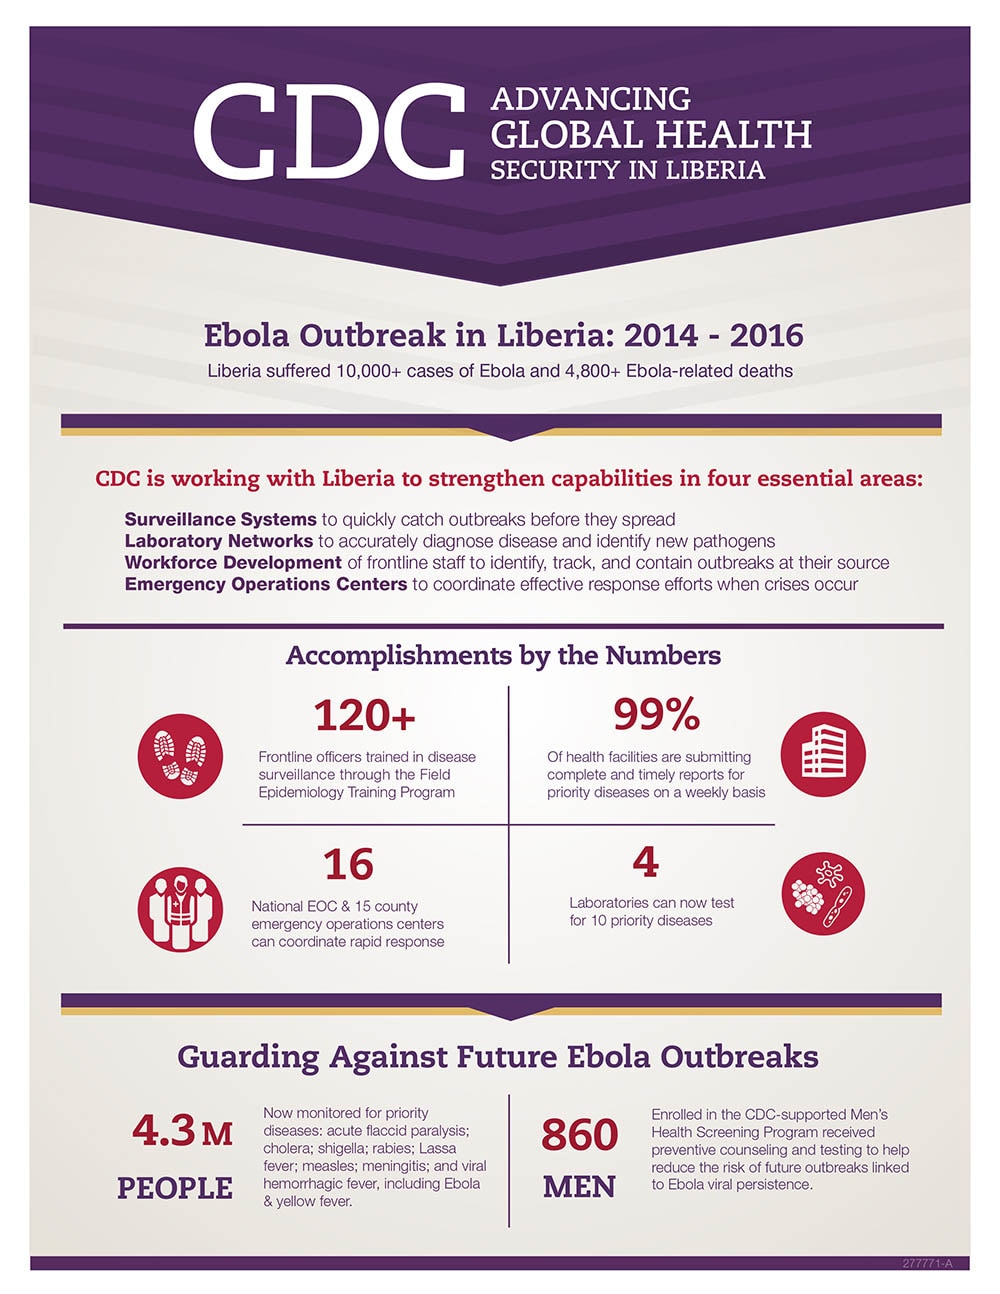 CDC Advancing Global Health Security In Liberia